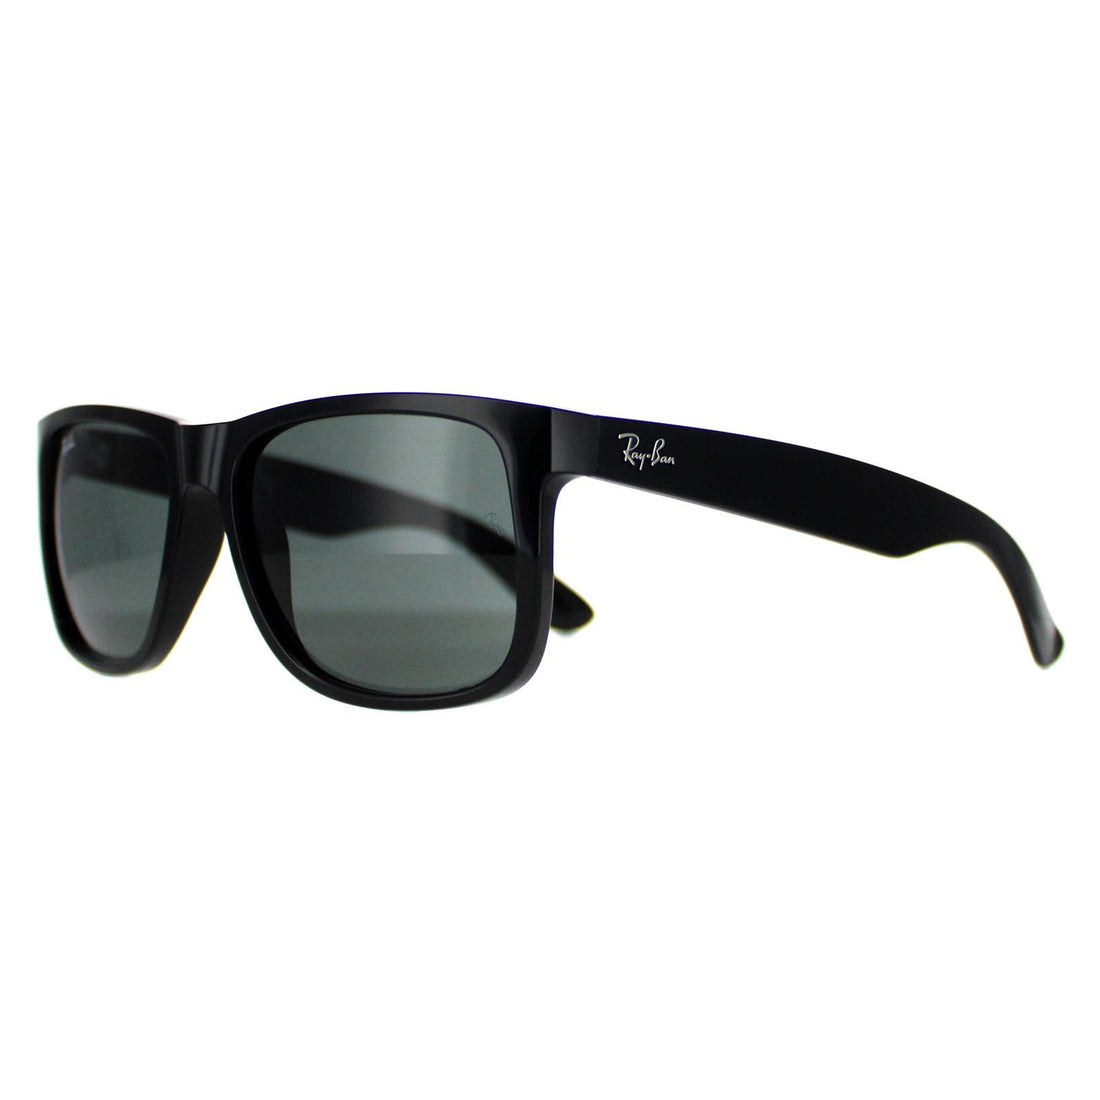 Ray-Ban Justin Classic RB4165 Sunglasses